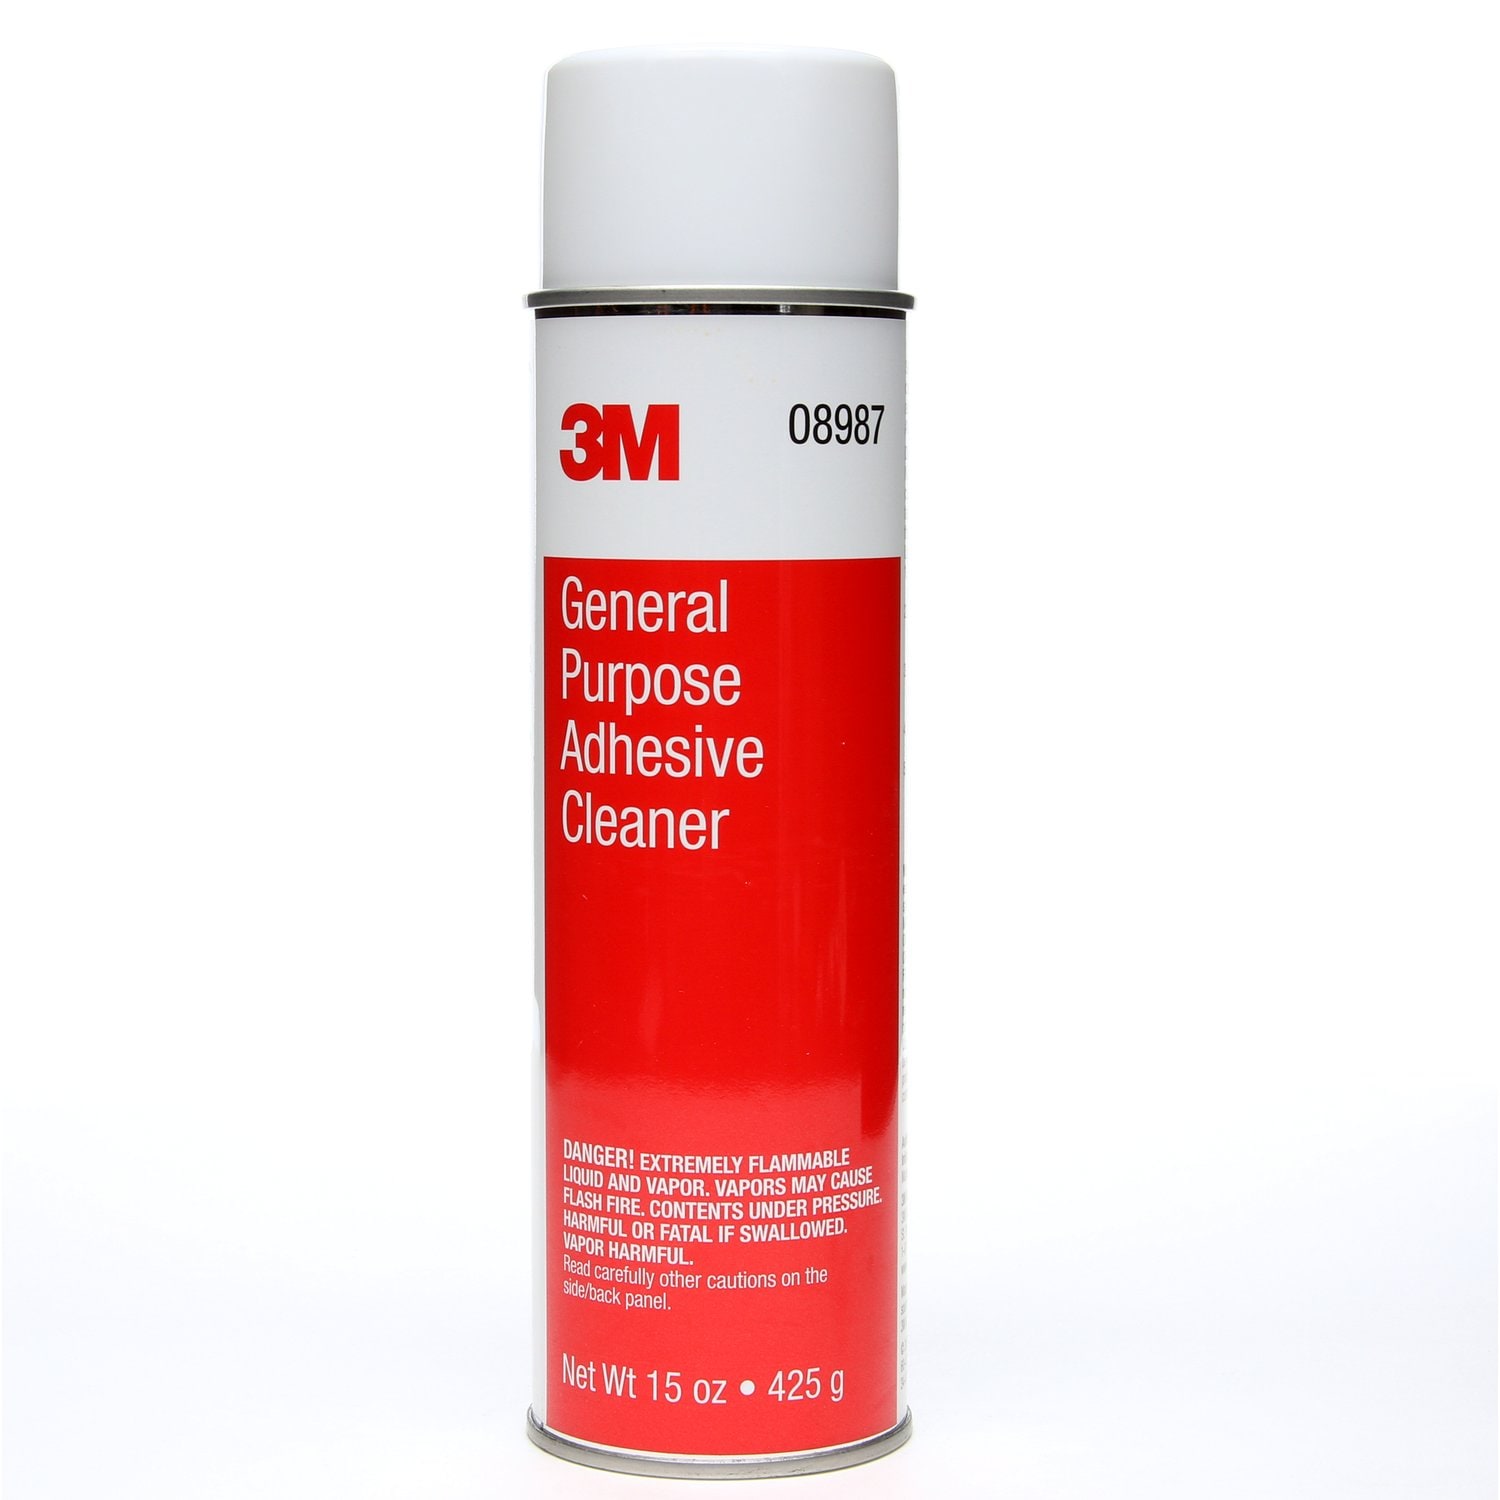 7000045467 - 3M General Purpose Adhesive Cleaner, 08987, 15 oz Net Wt, 12 per case